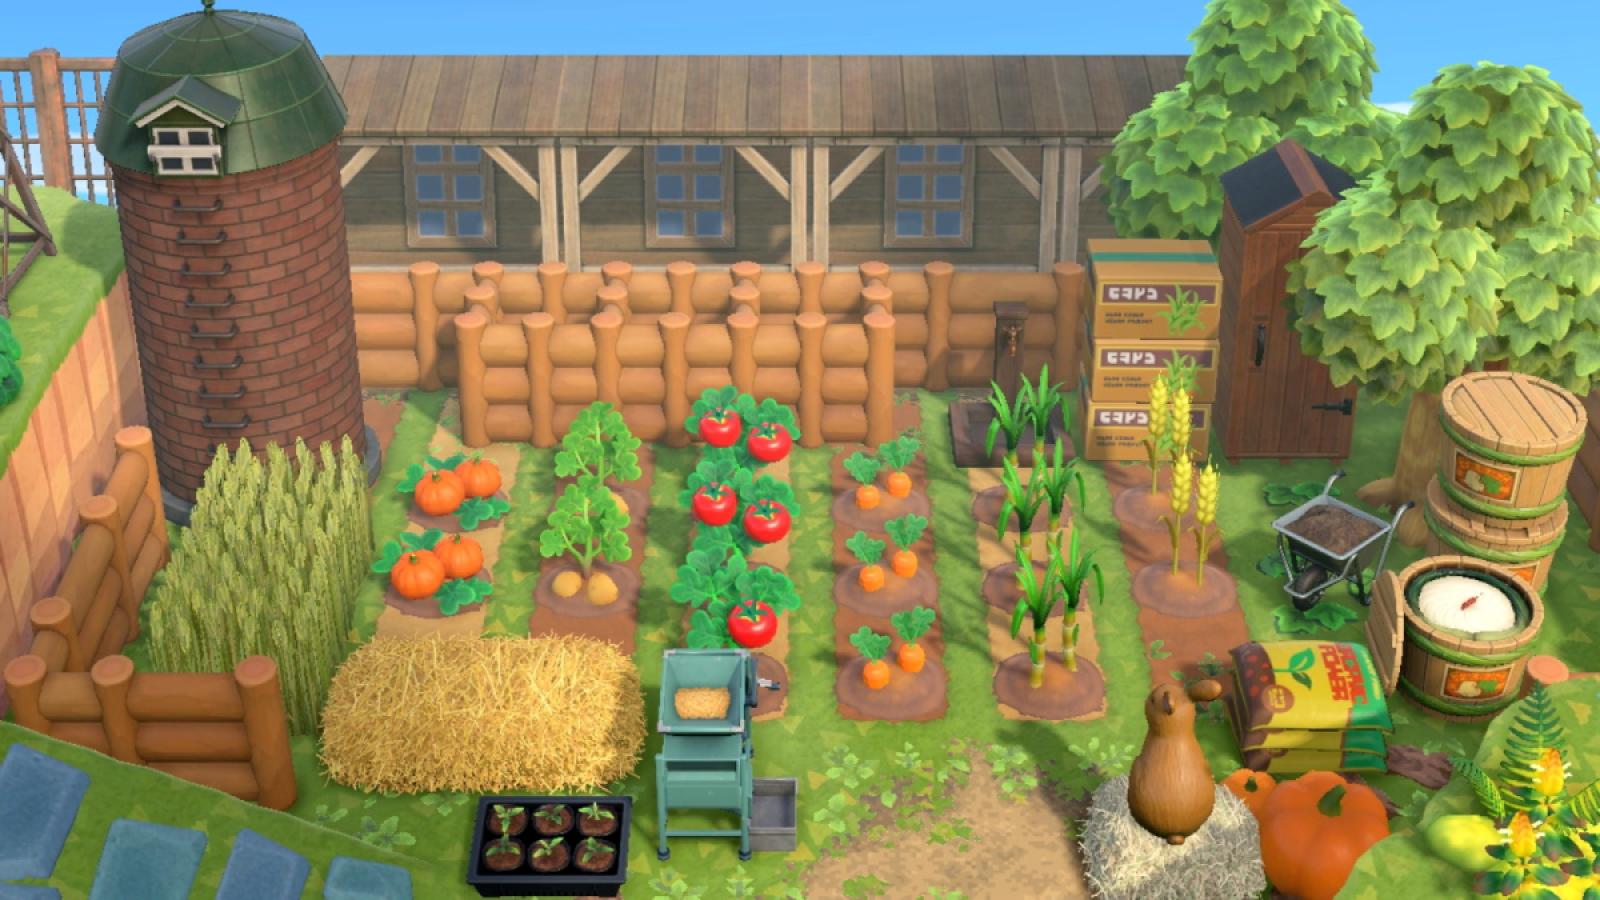 Farming in Animal Crossing: New Horizons